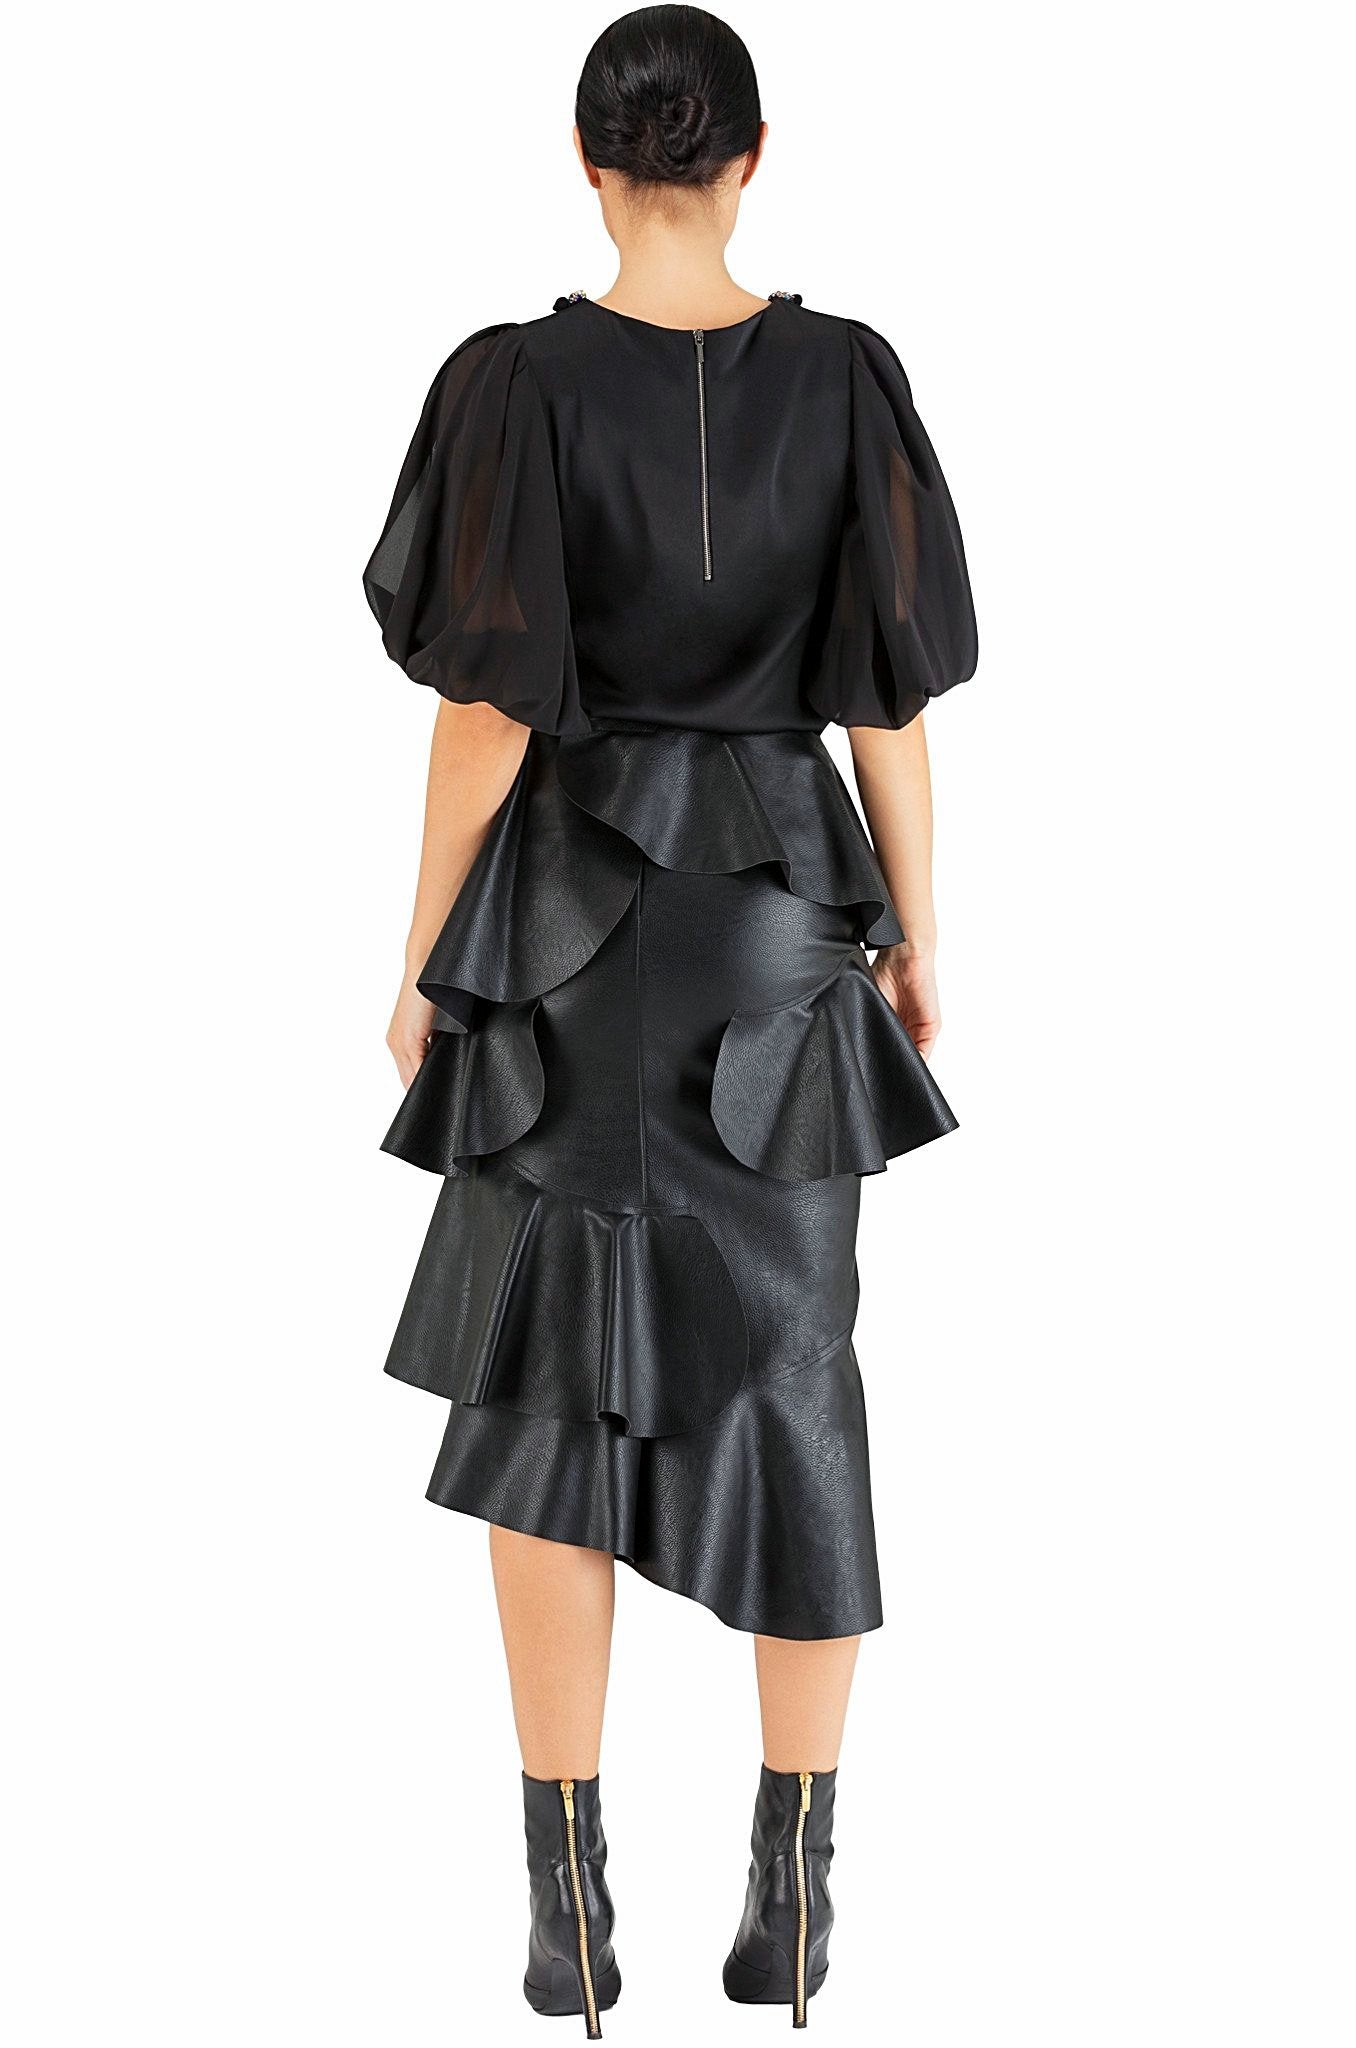 Black Ruffle Leather Skirt - 80% off